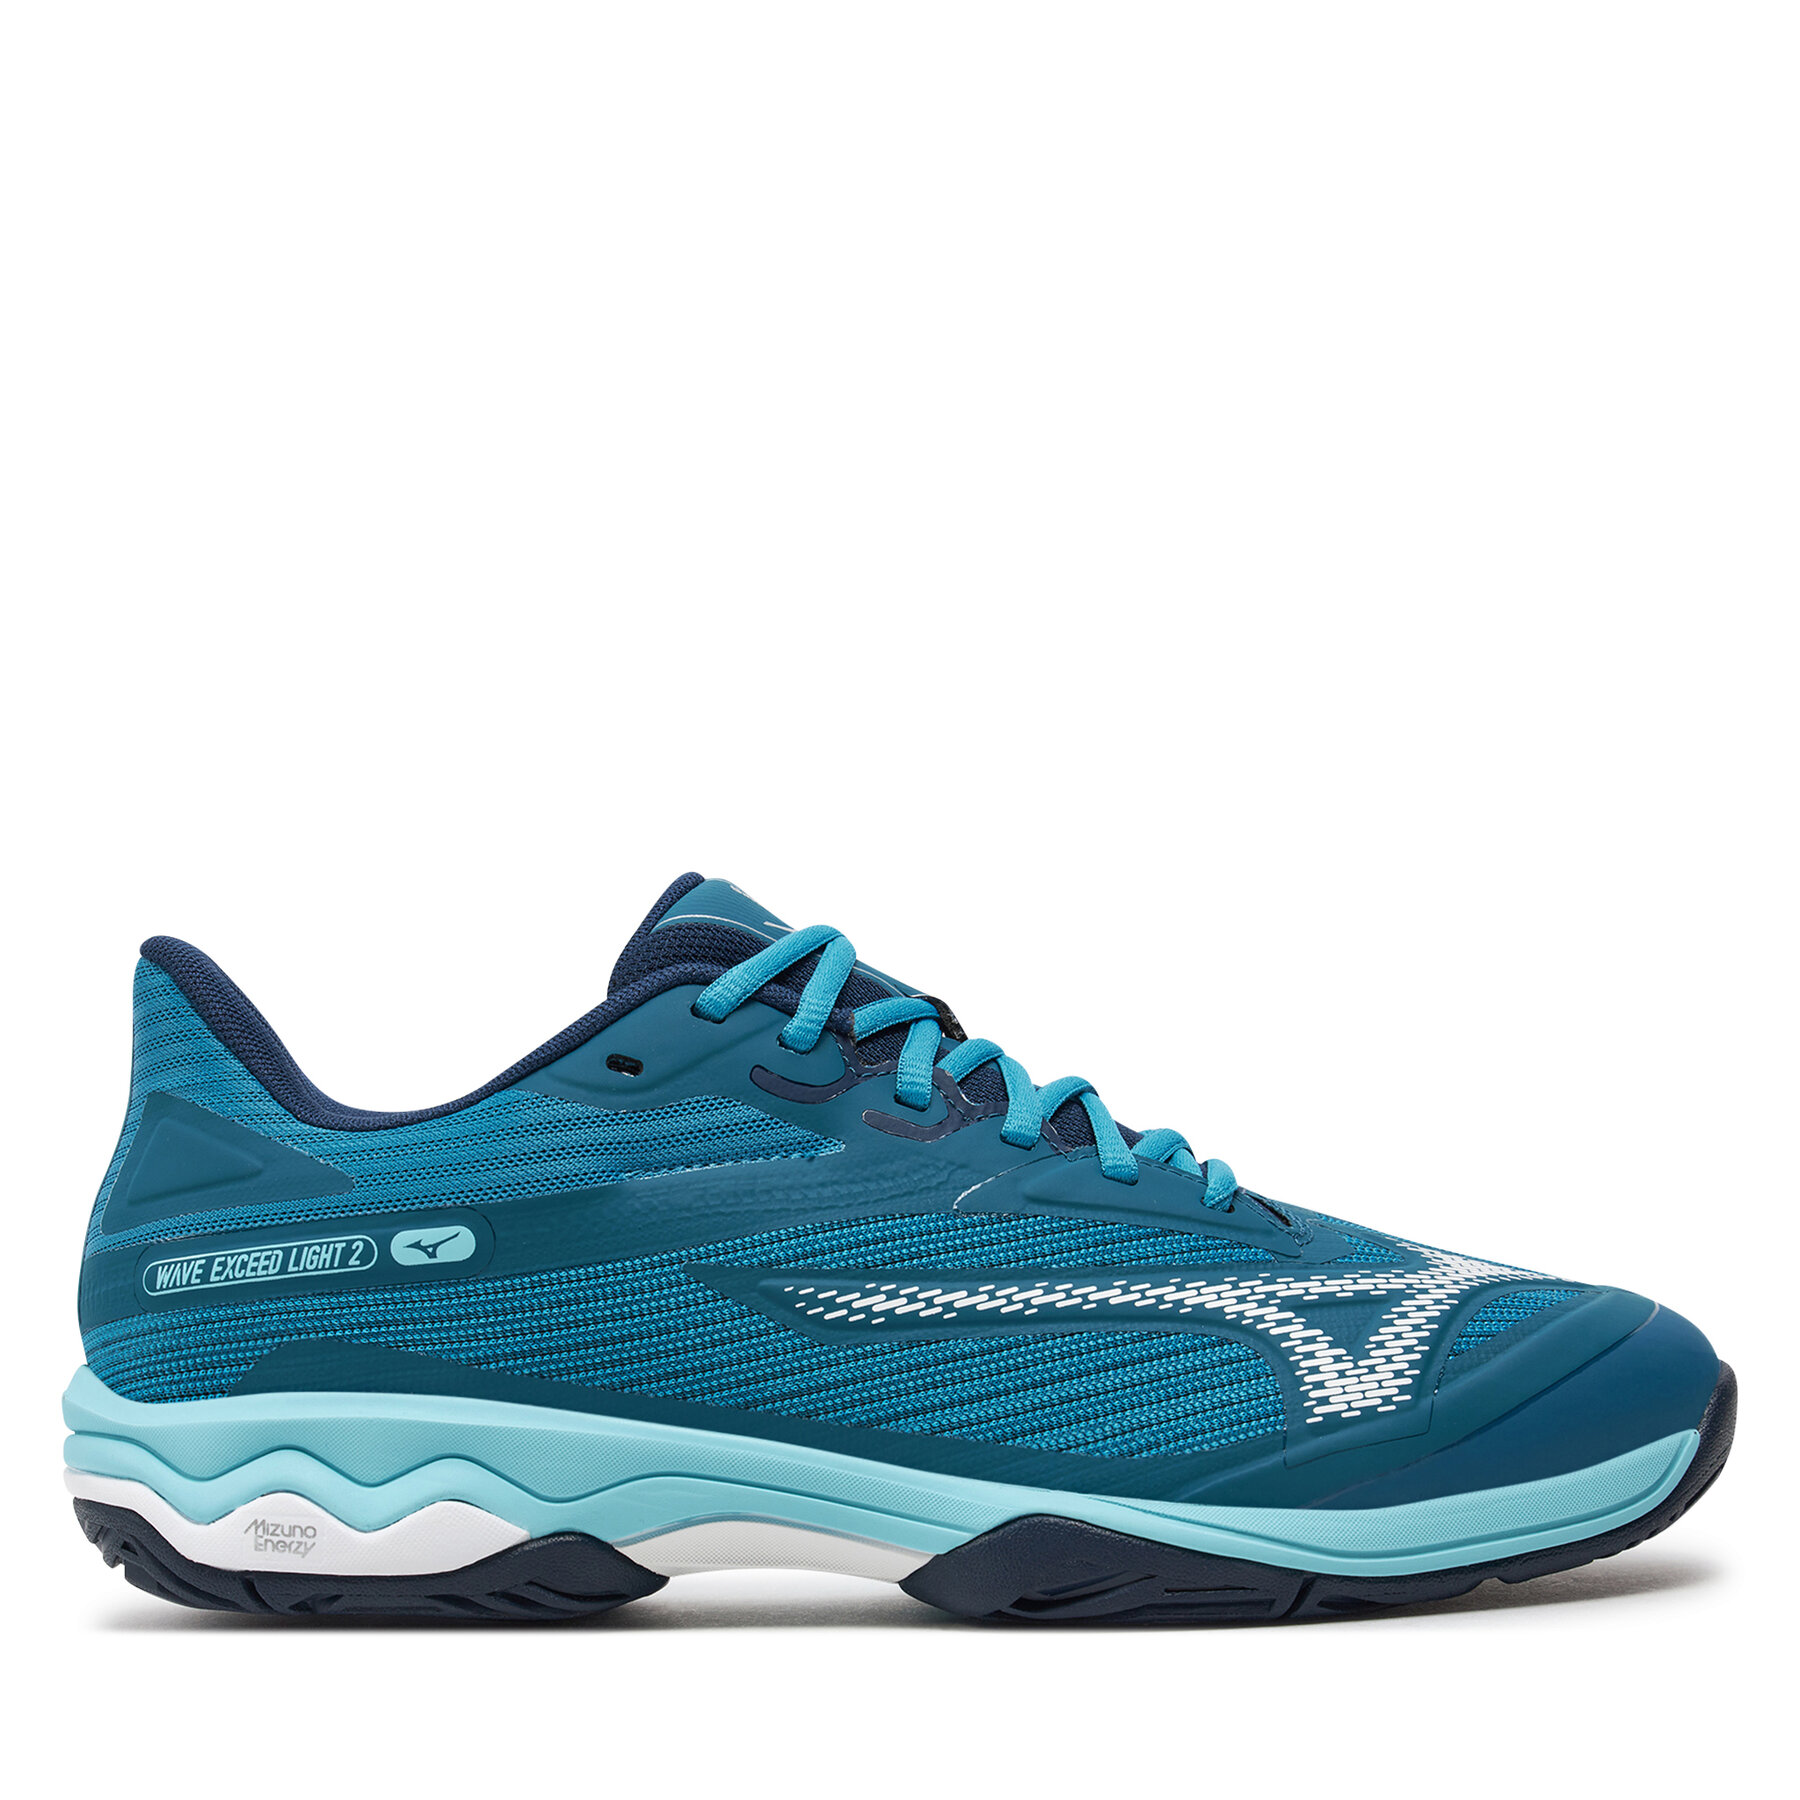 Schuhe Mizuno Wave Exceed Light 2 Ac 61GA2318 Moroccan Blue/White/Bluejay 27 von Mizuno